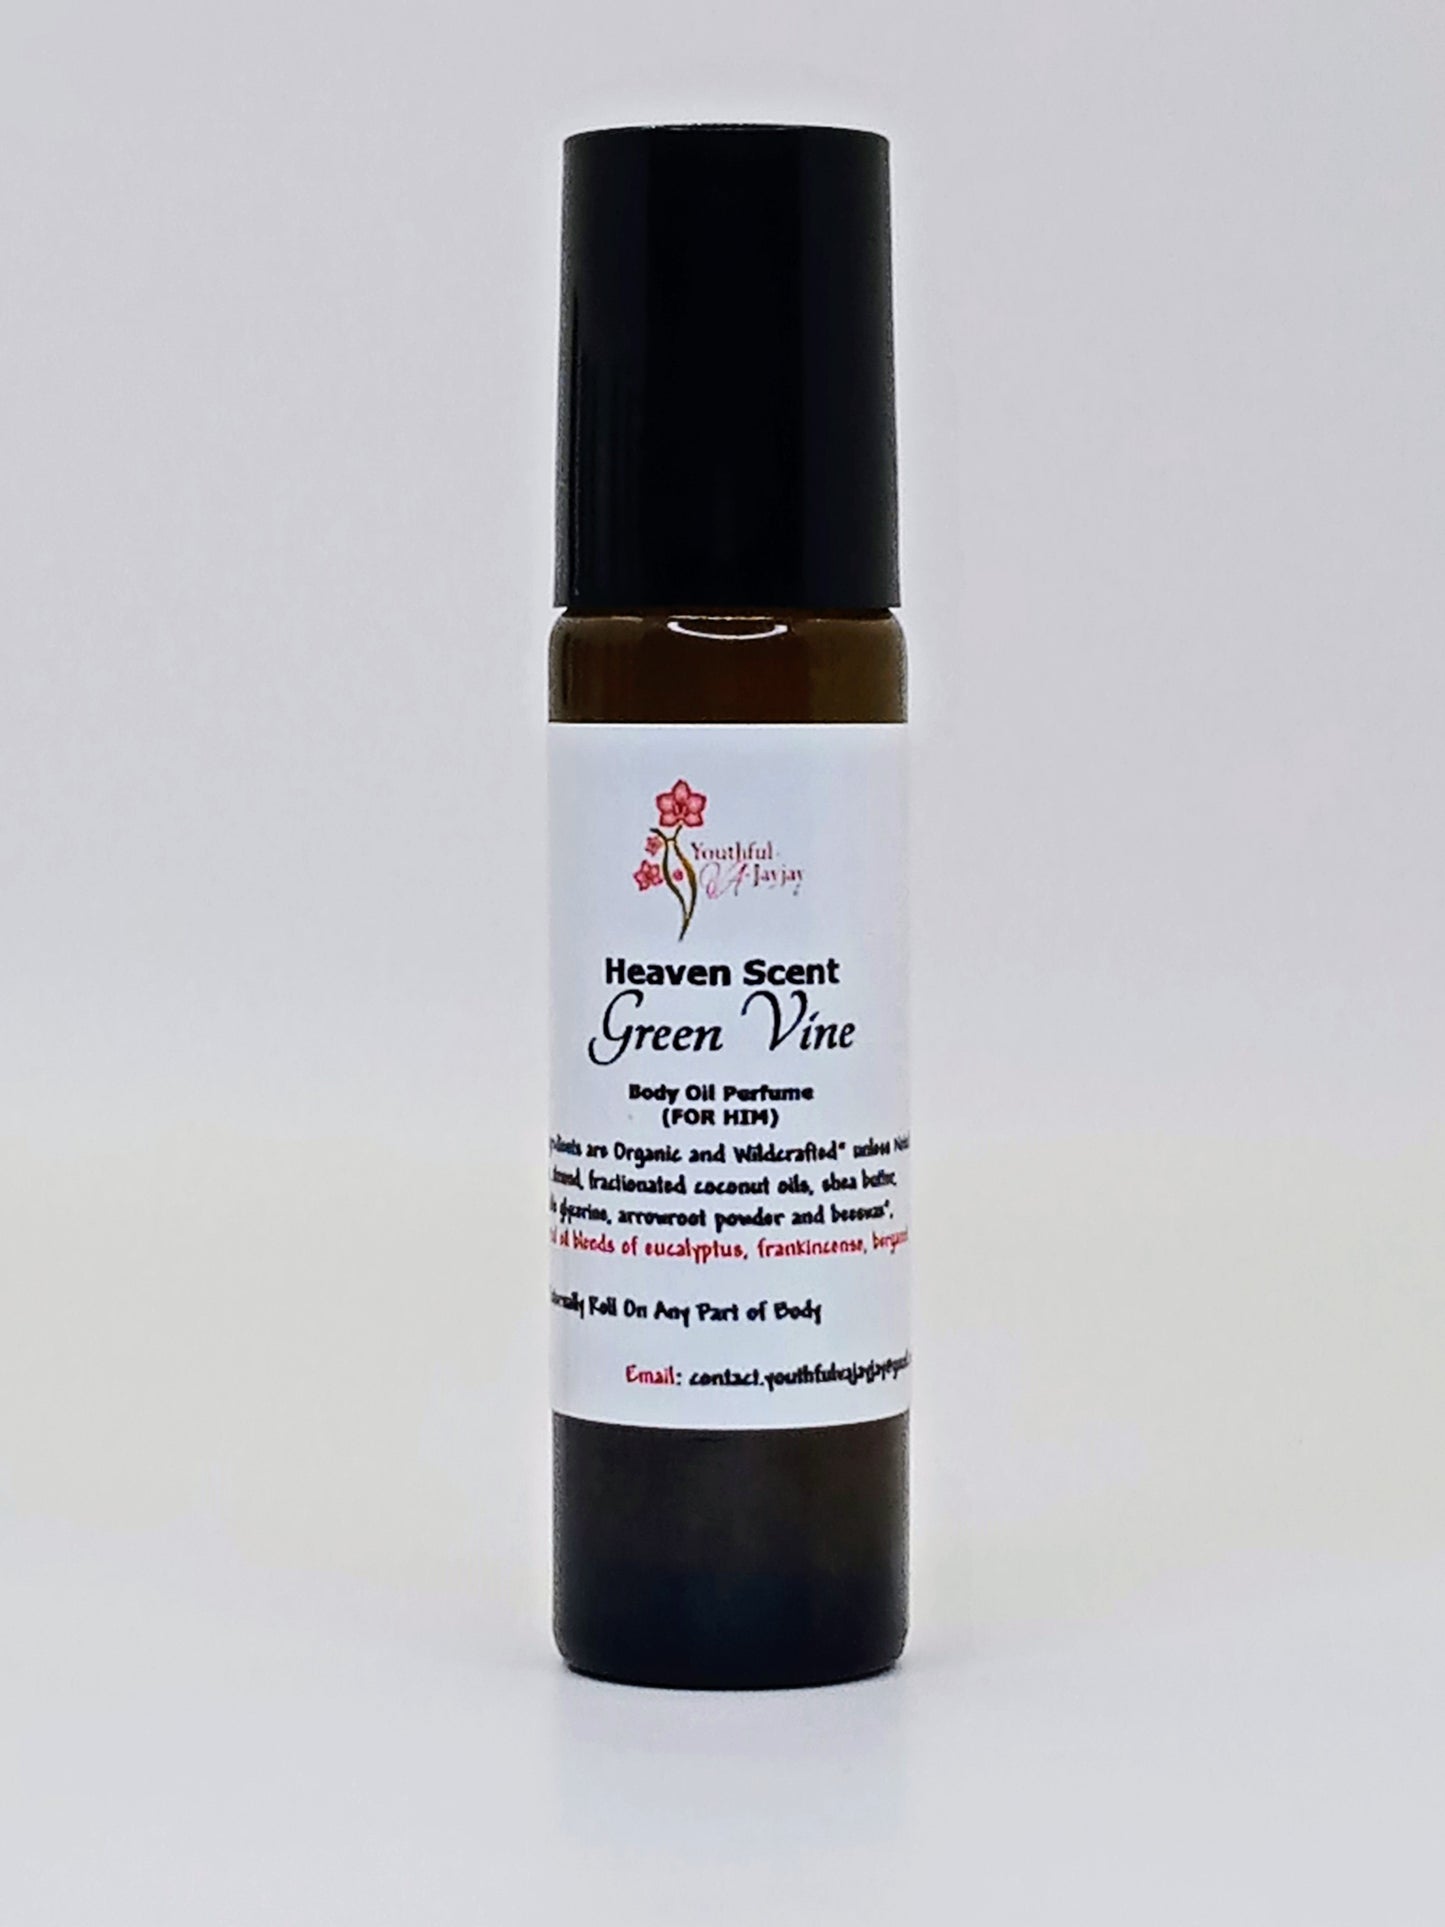 HEAVEN SCENT: Powder Puff Organic Body Oil Perfume, 10ml